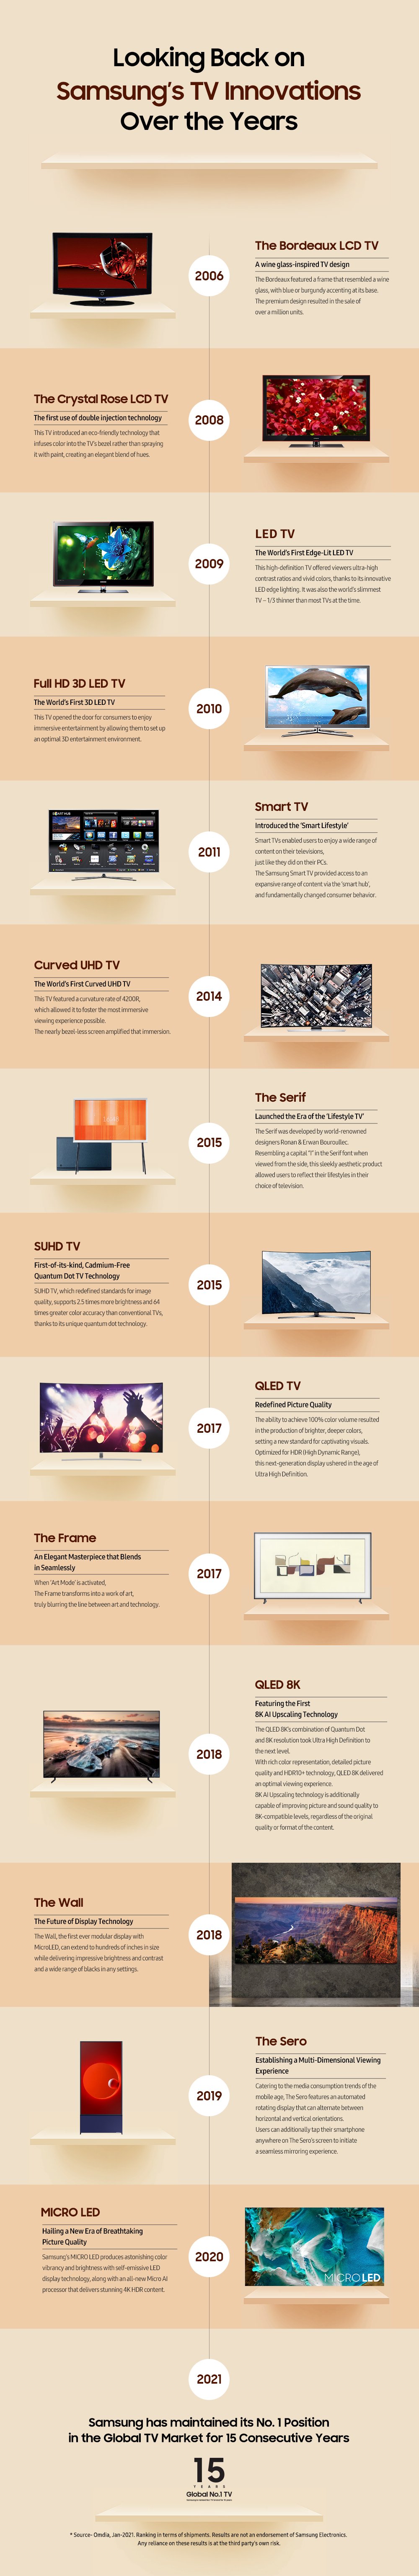 Samsung TV Technologies Timeline